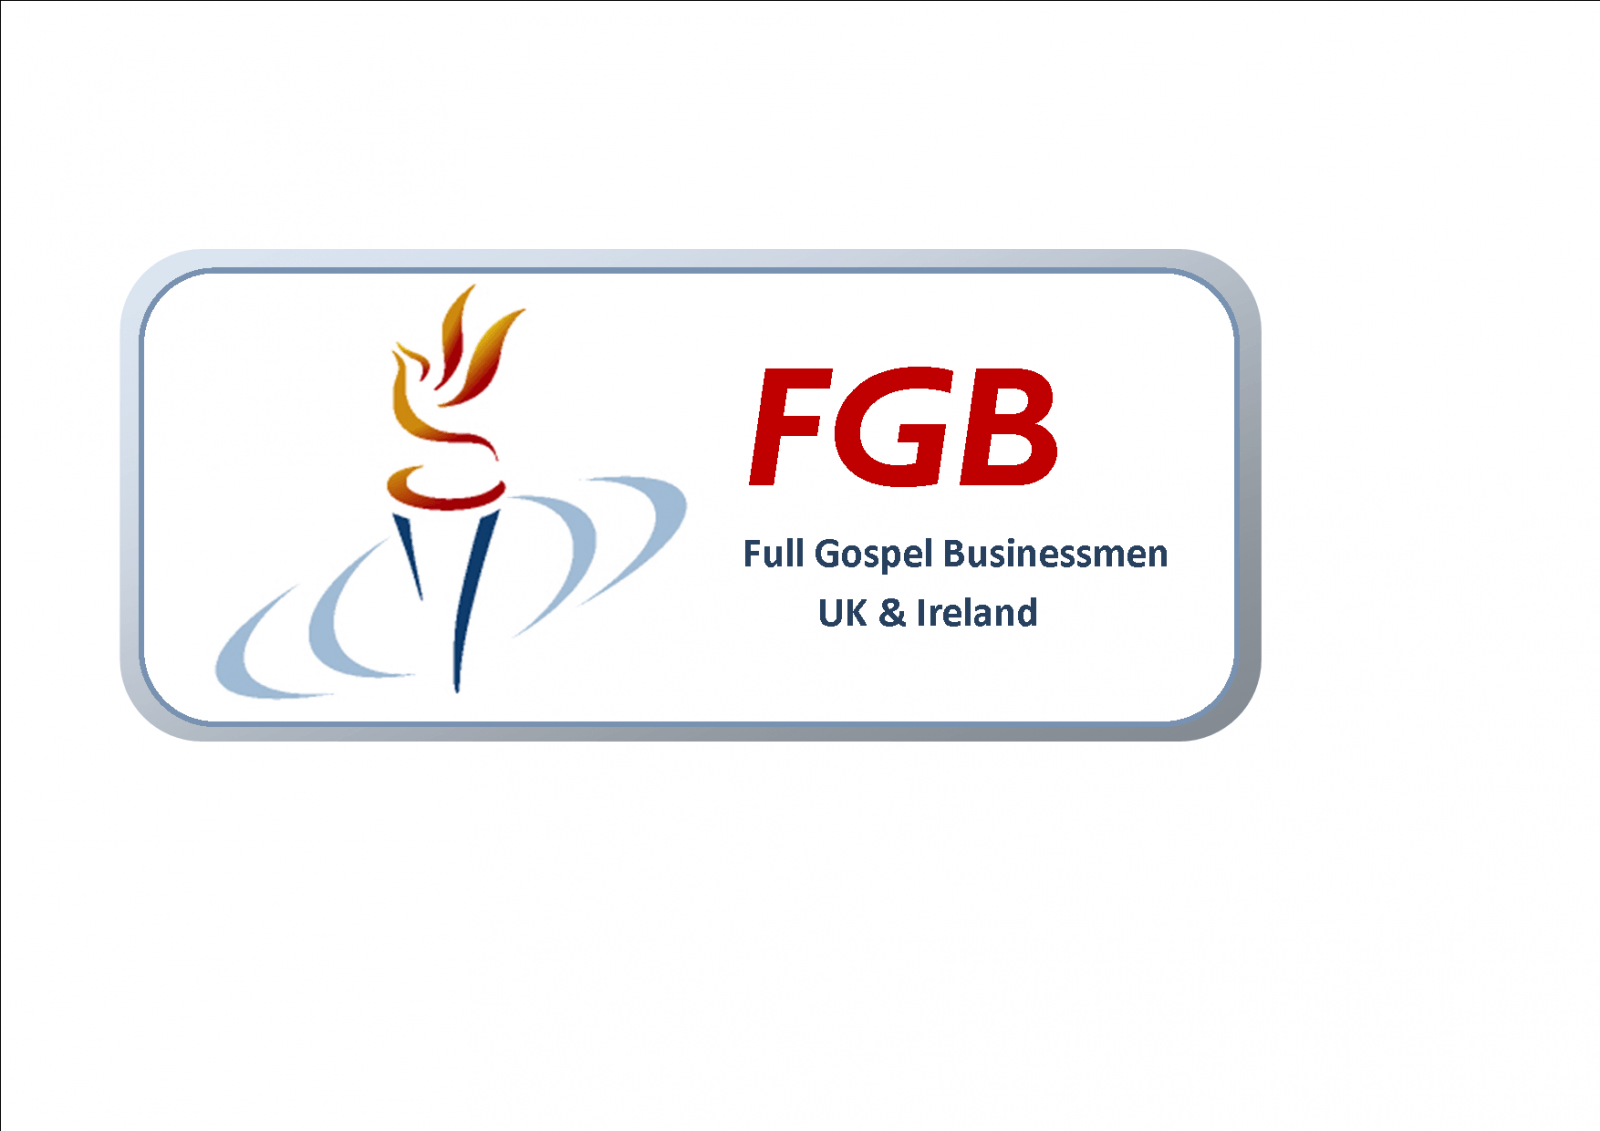 Here Logo - Logos and Images | FGB UK & Ireland |